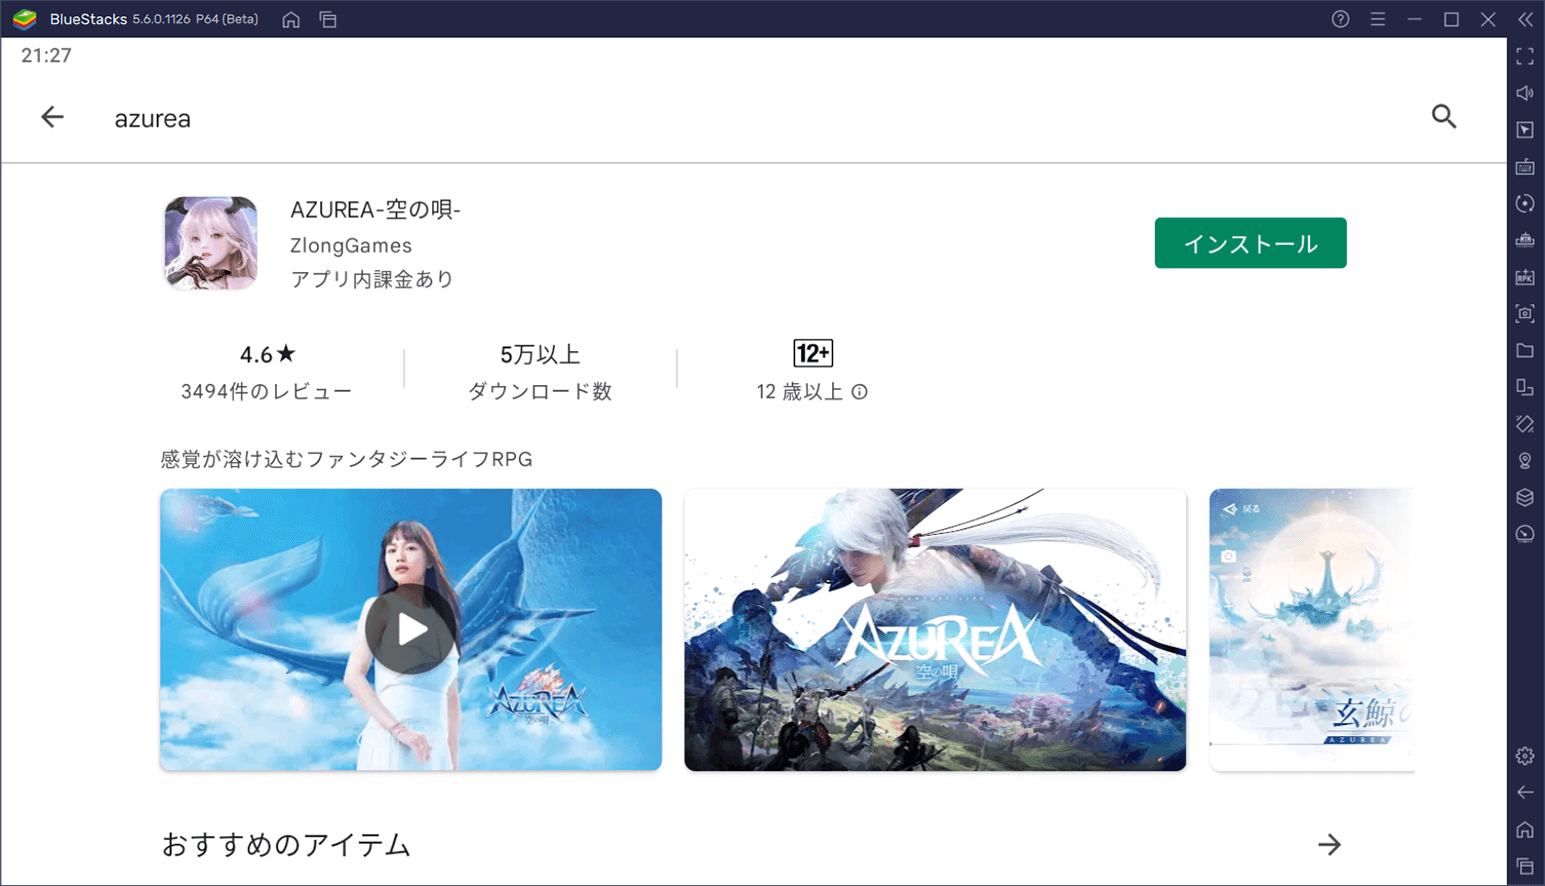 AZUREA-空の唄- - Apps on Google Play